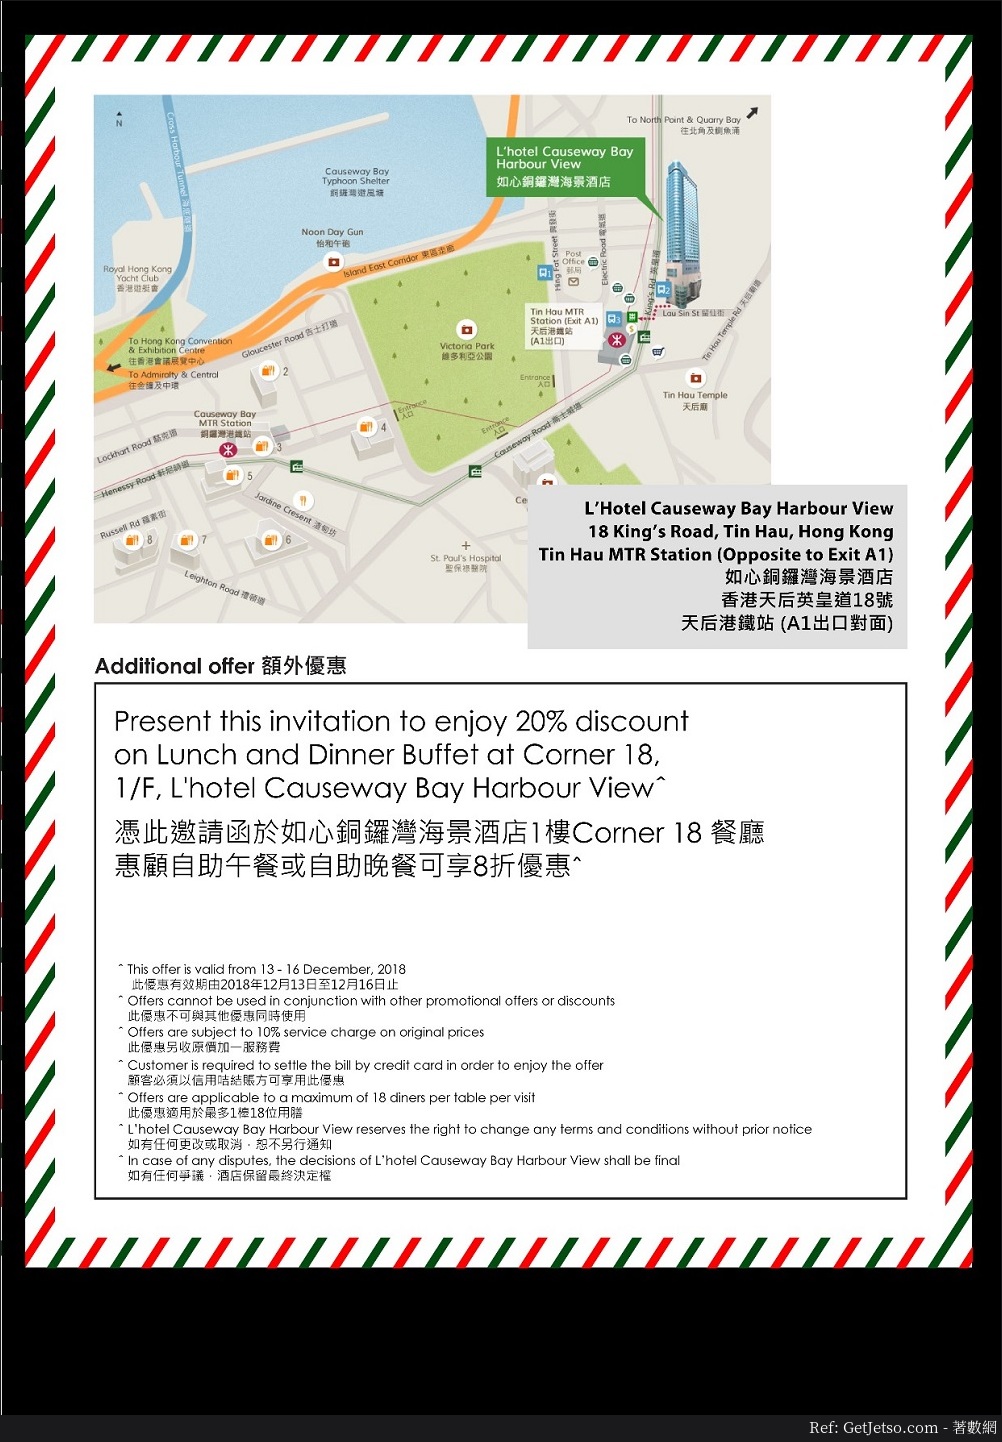 THE SWANK Outlet 國際名牌全場1折聖誕優惠(18年12月13-16日)圖片2